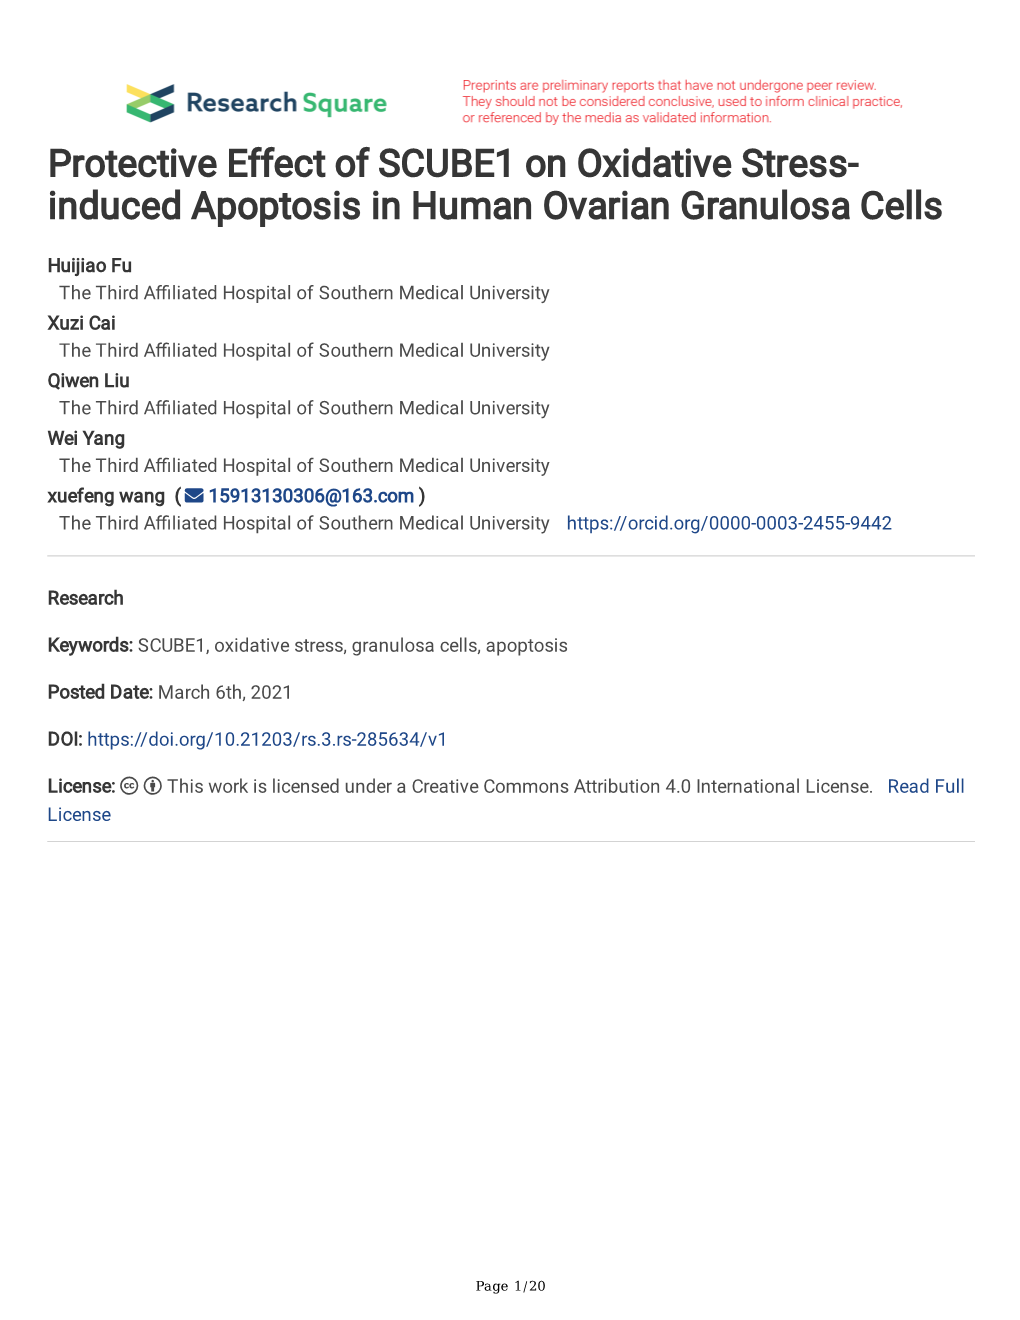 Induced Apoptosis in Human Ovarian Granulosa Cells